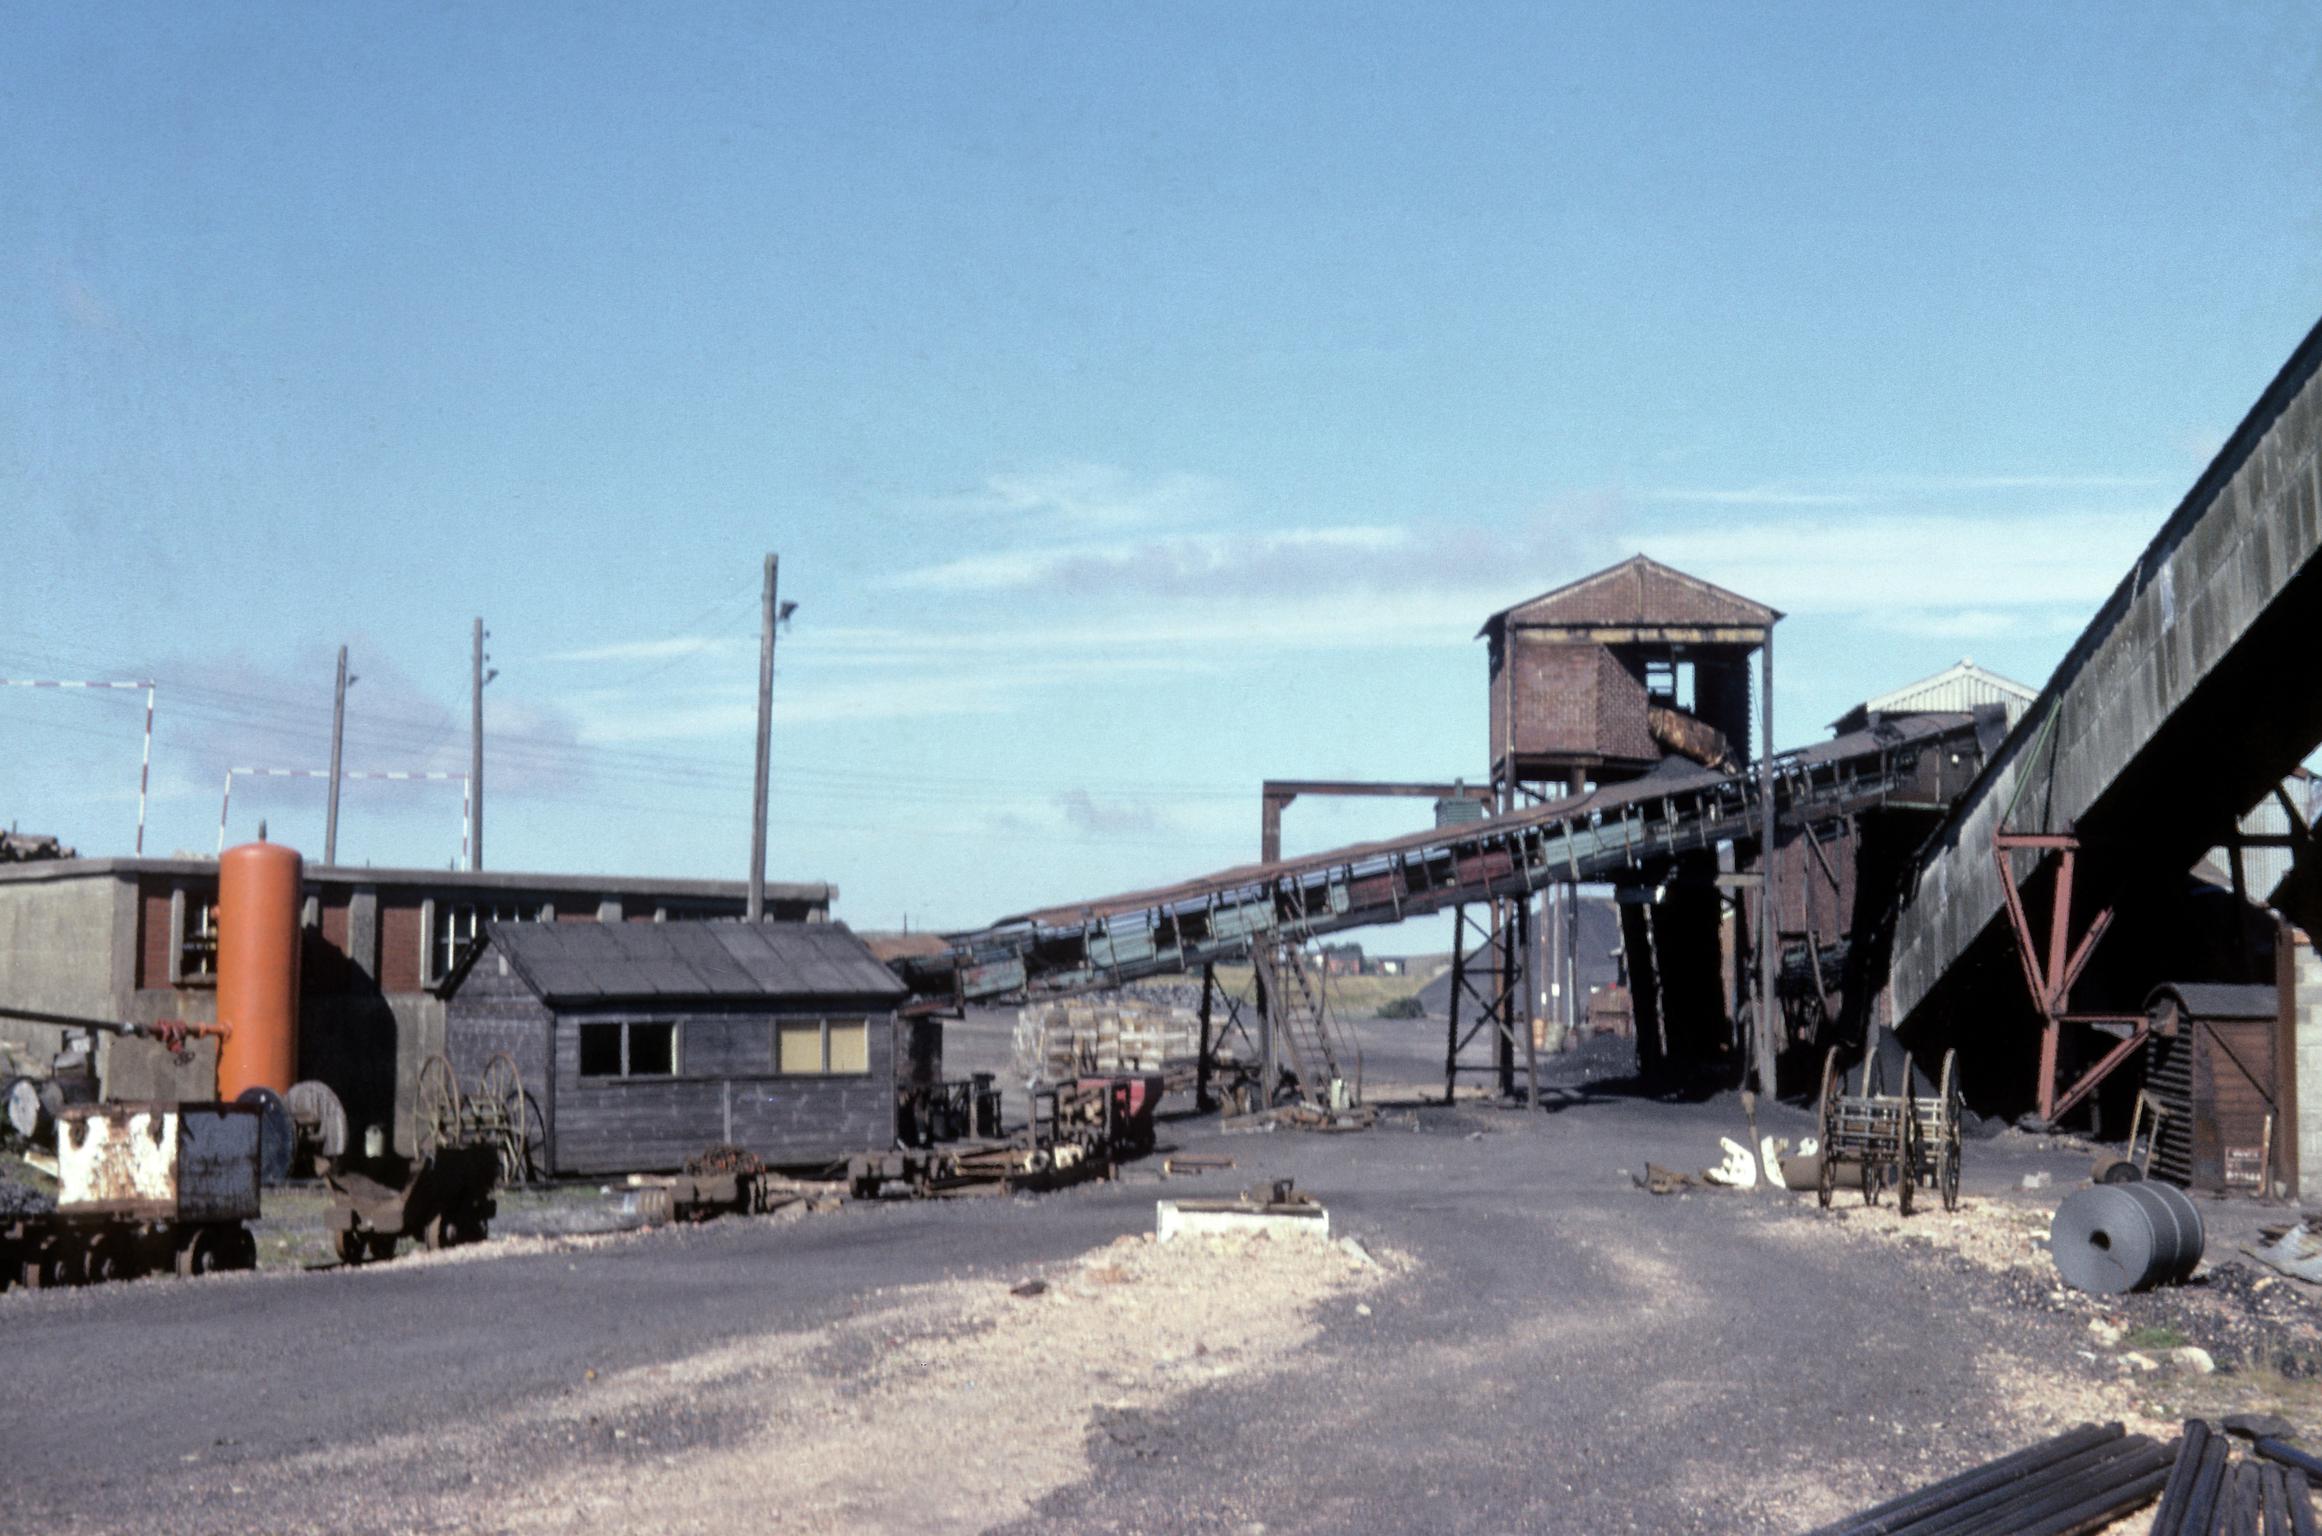 Big Pit Colliery, slide